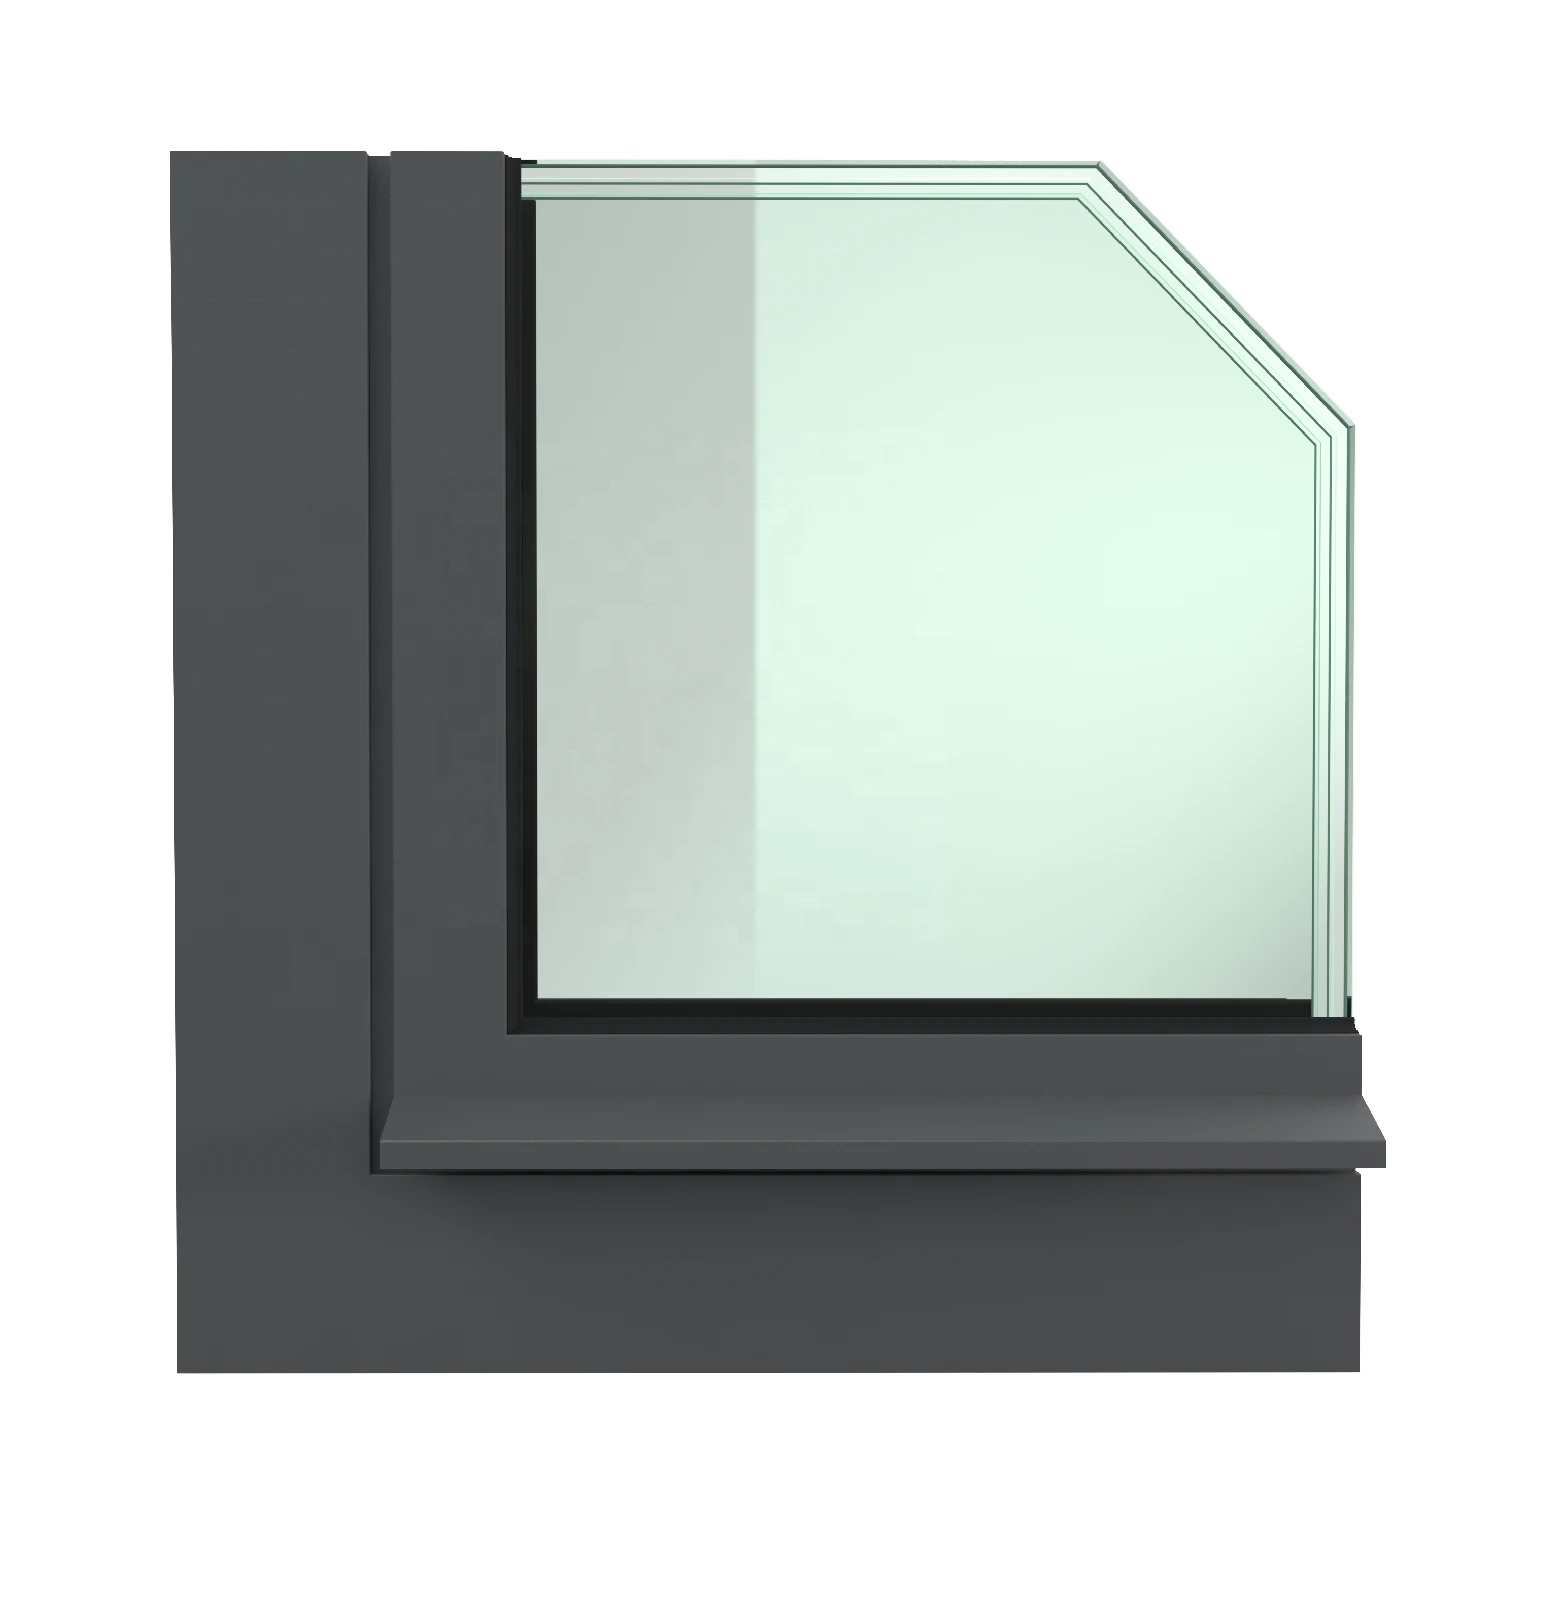 Industrial frame RW 71 window and door system extrusion aluminium profile